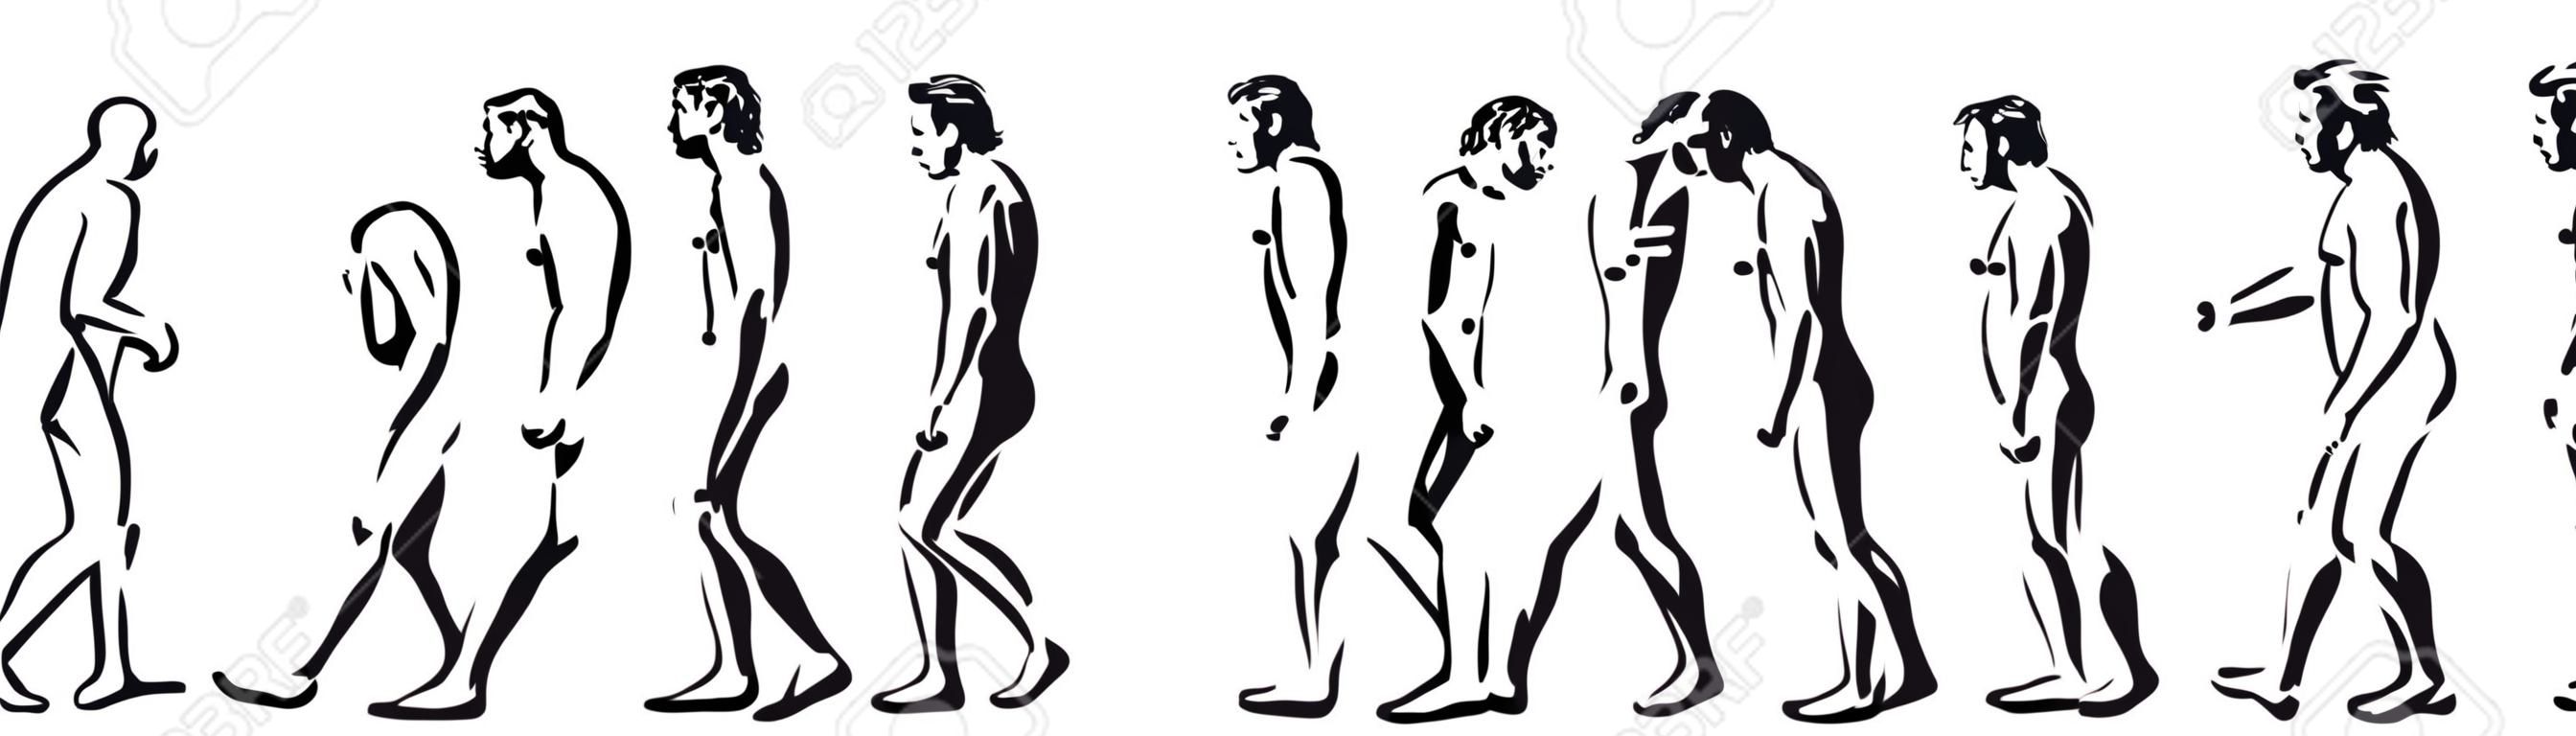 Human Evolution czas komputerowo ilustracji